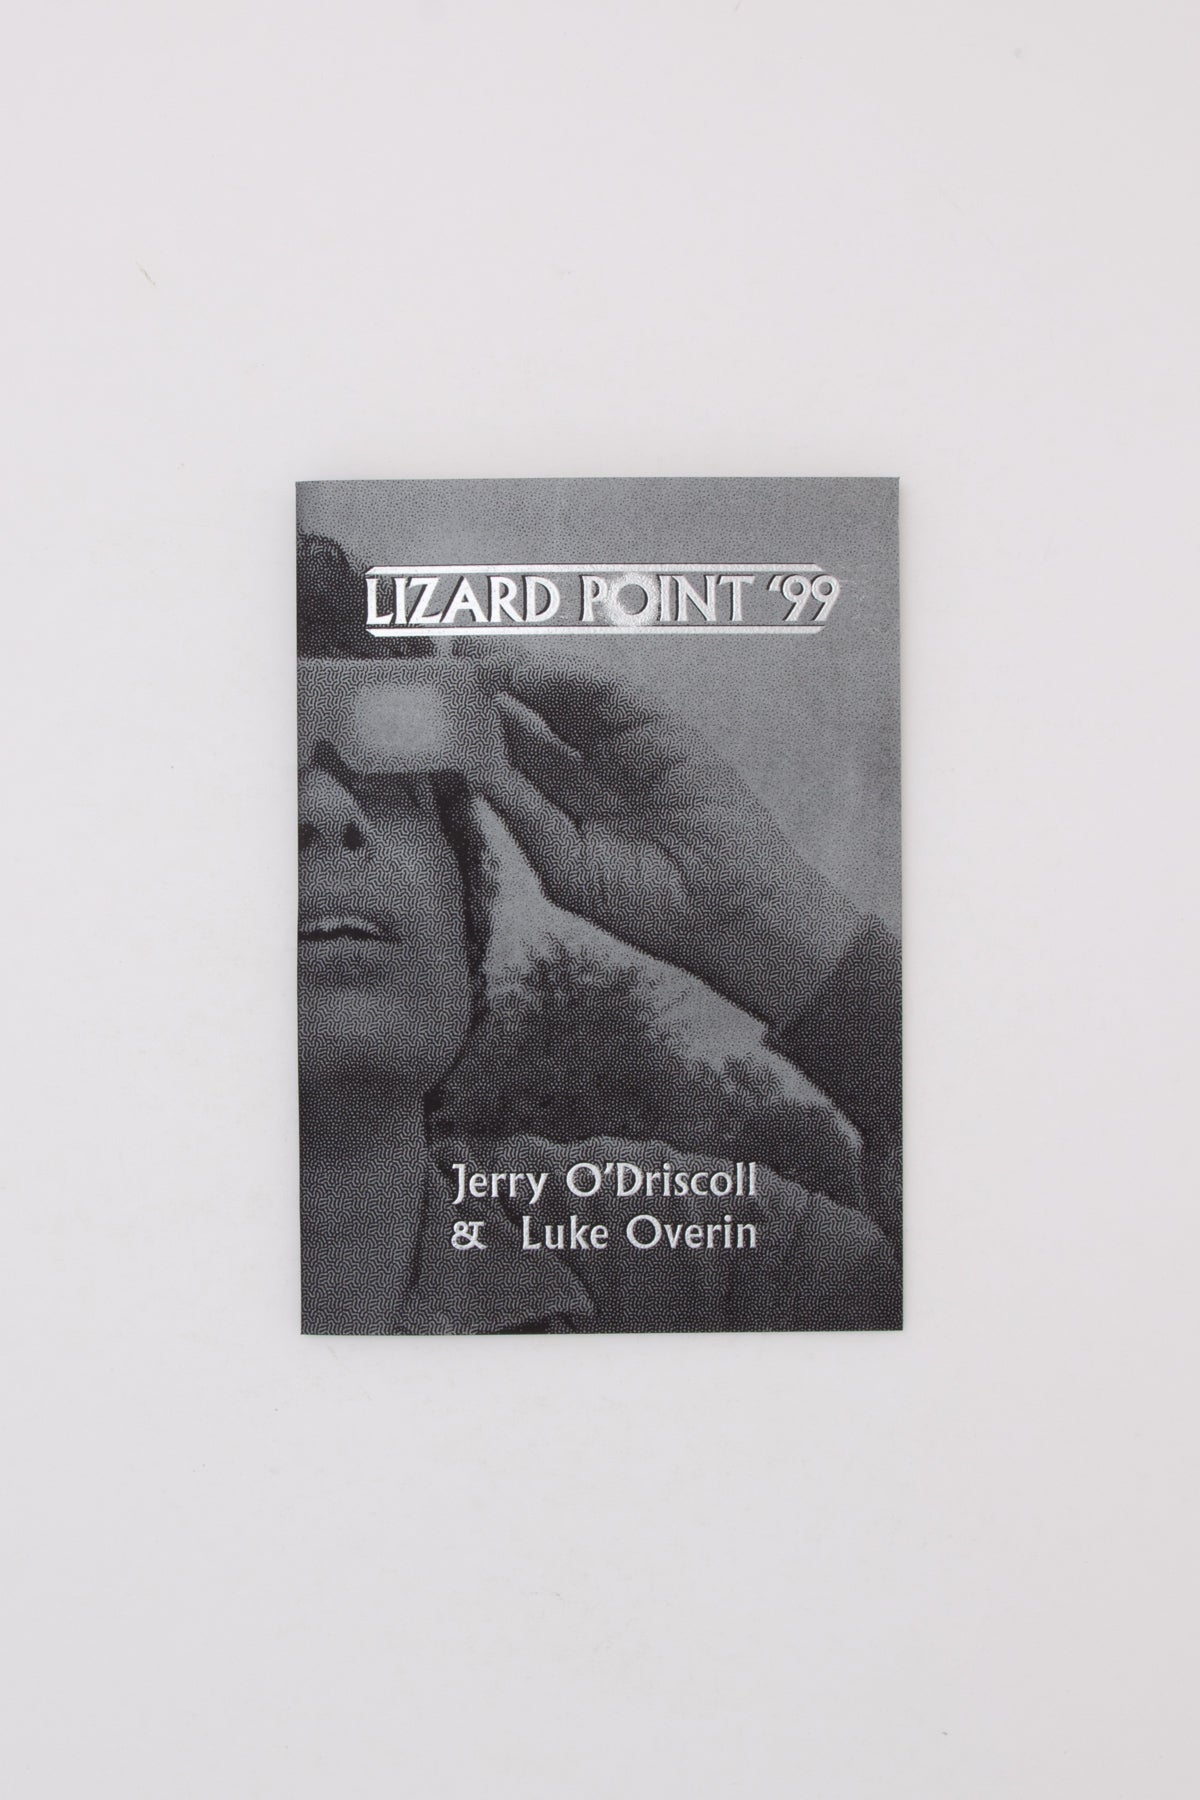 Lizard Point '99 - Jerry O'Driscoll & Luke Overin